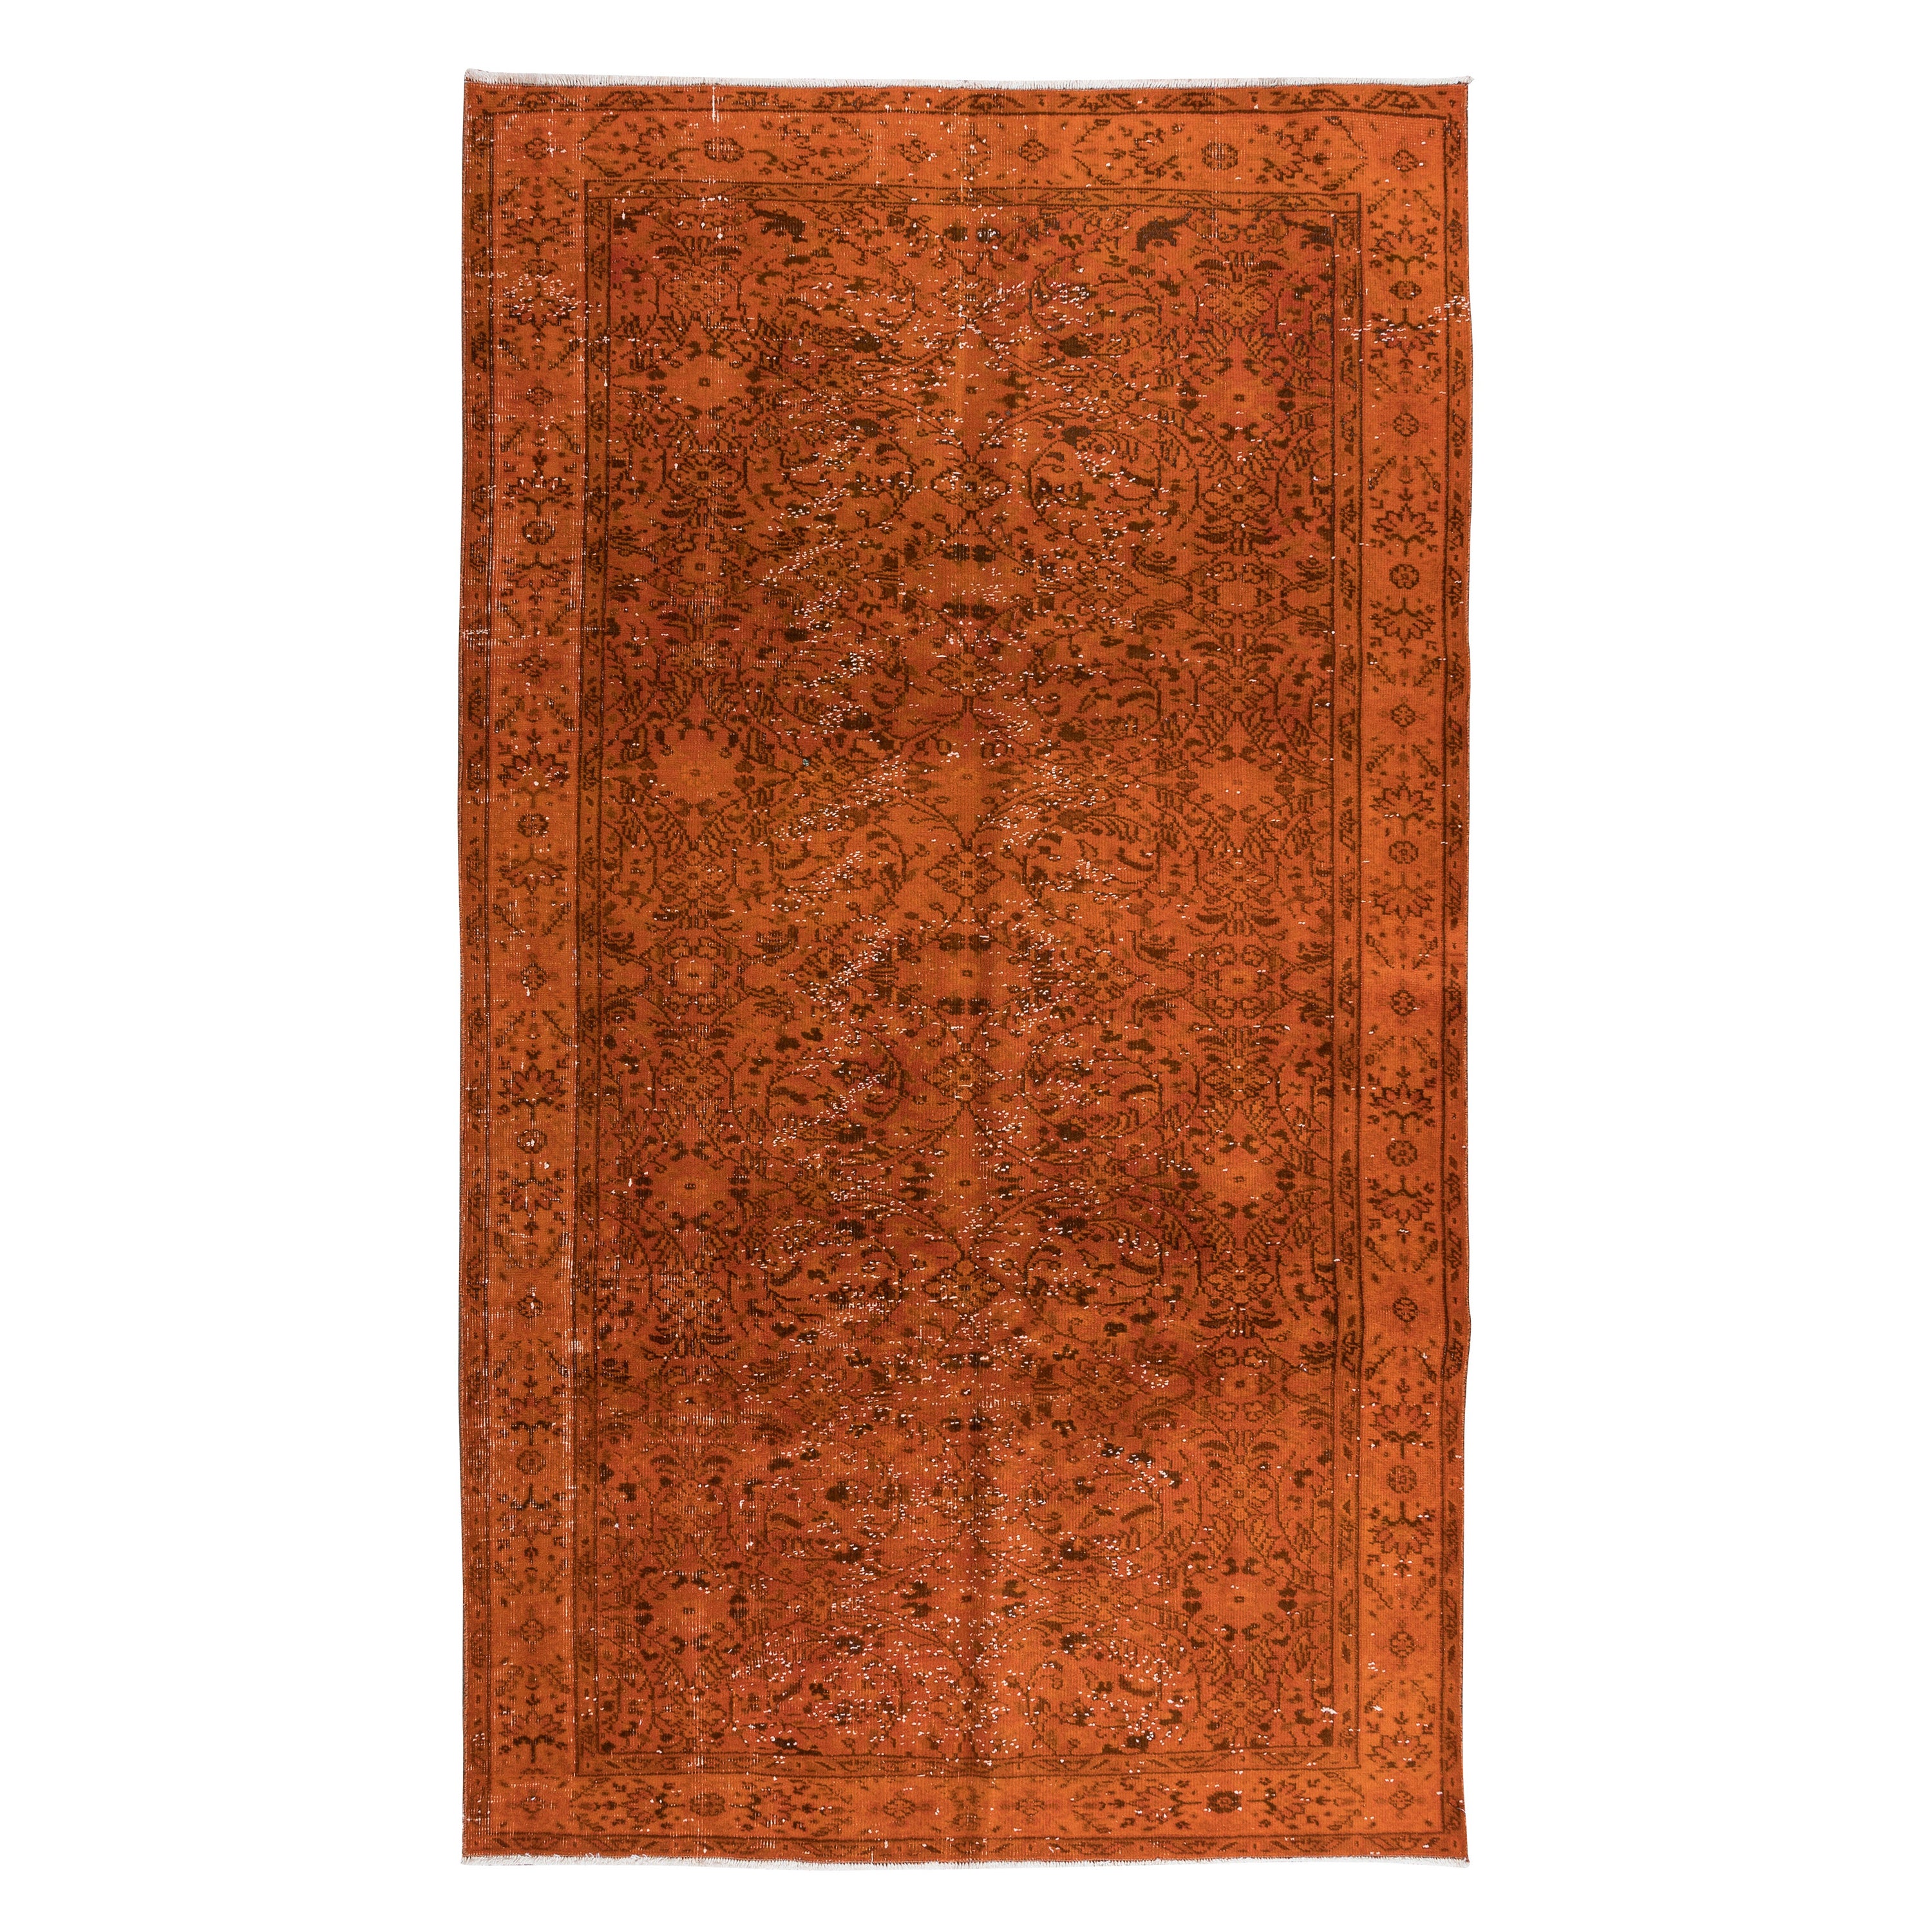 4.8x8.3 Ft Handmade Orange Area Rug from Turkey, Modern Anatolian Wool Carpet For Sale